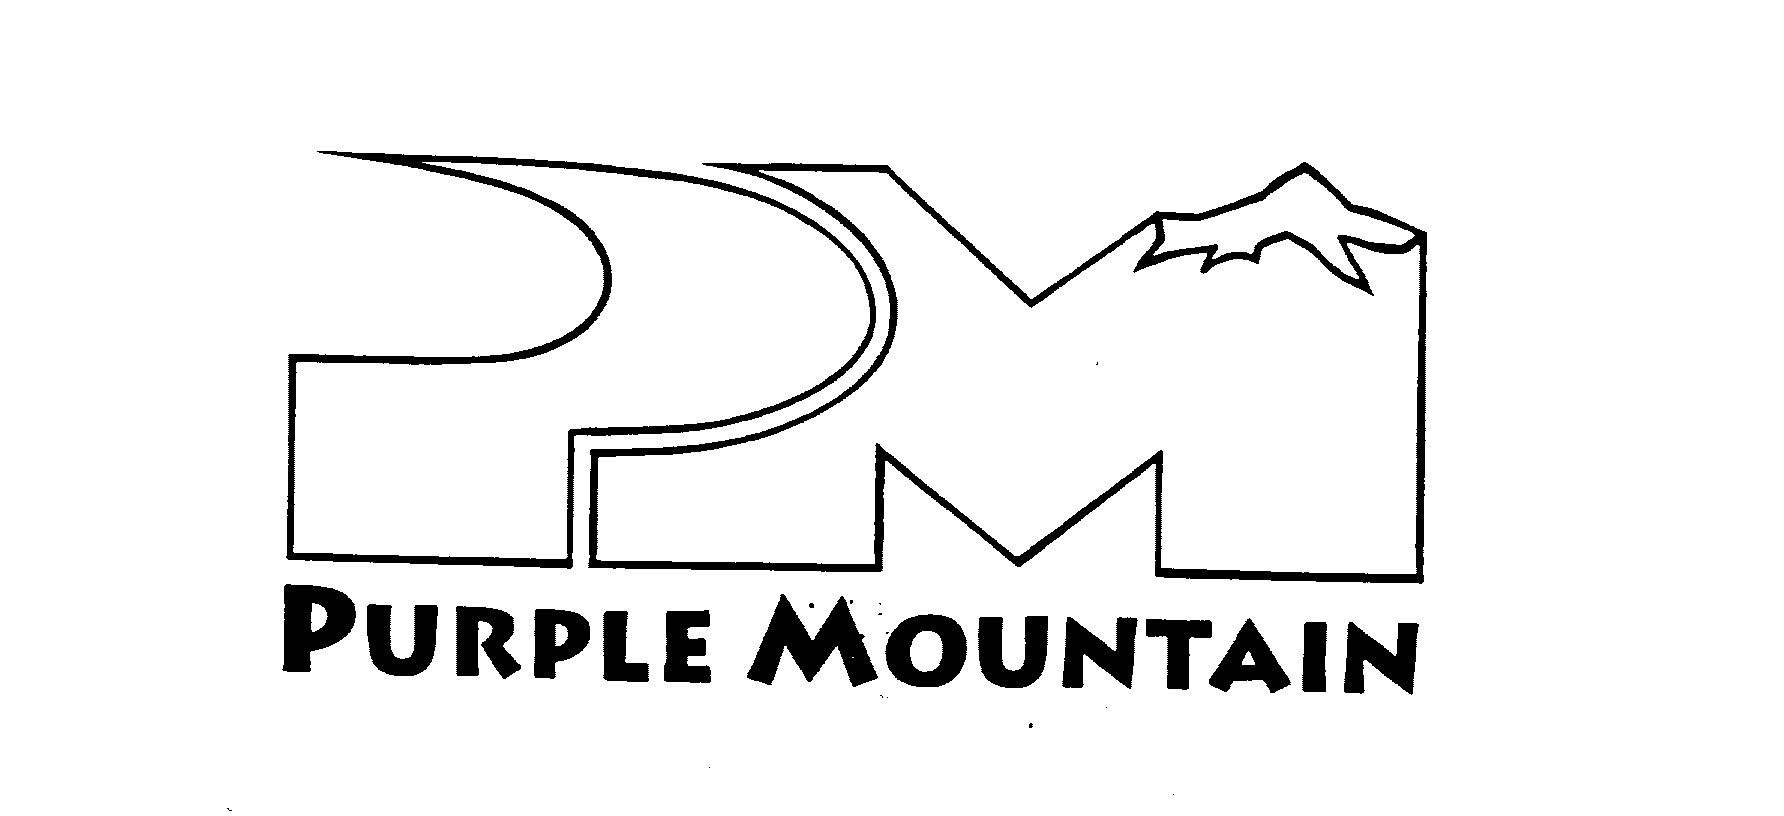  PM PURPLE MOUNTAIN